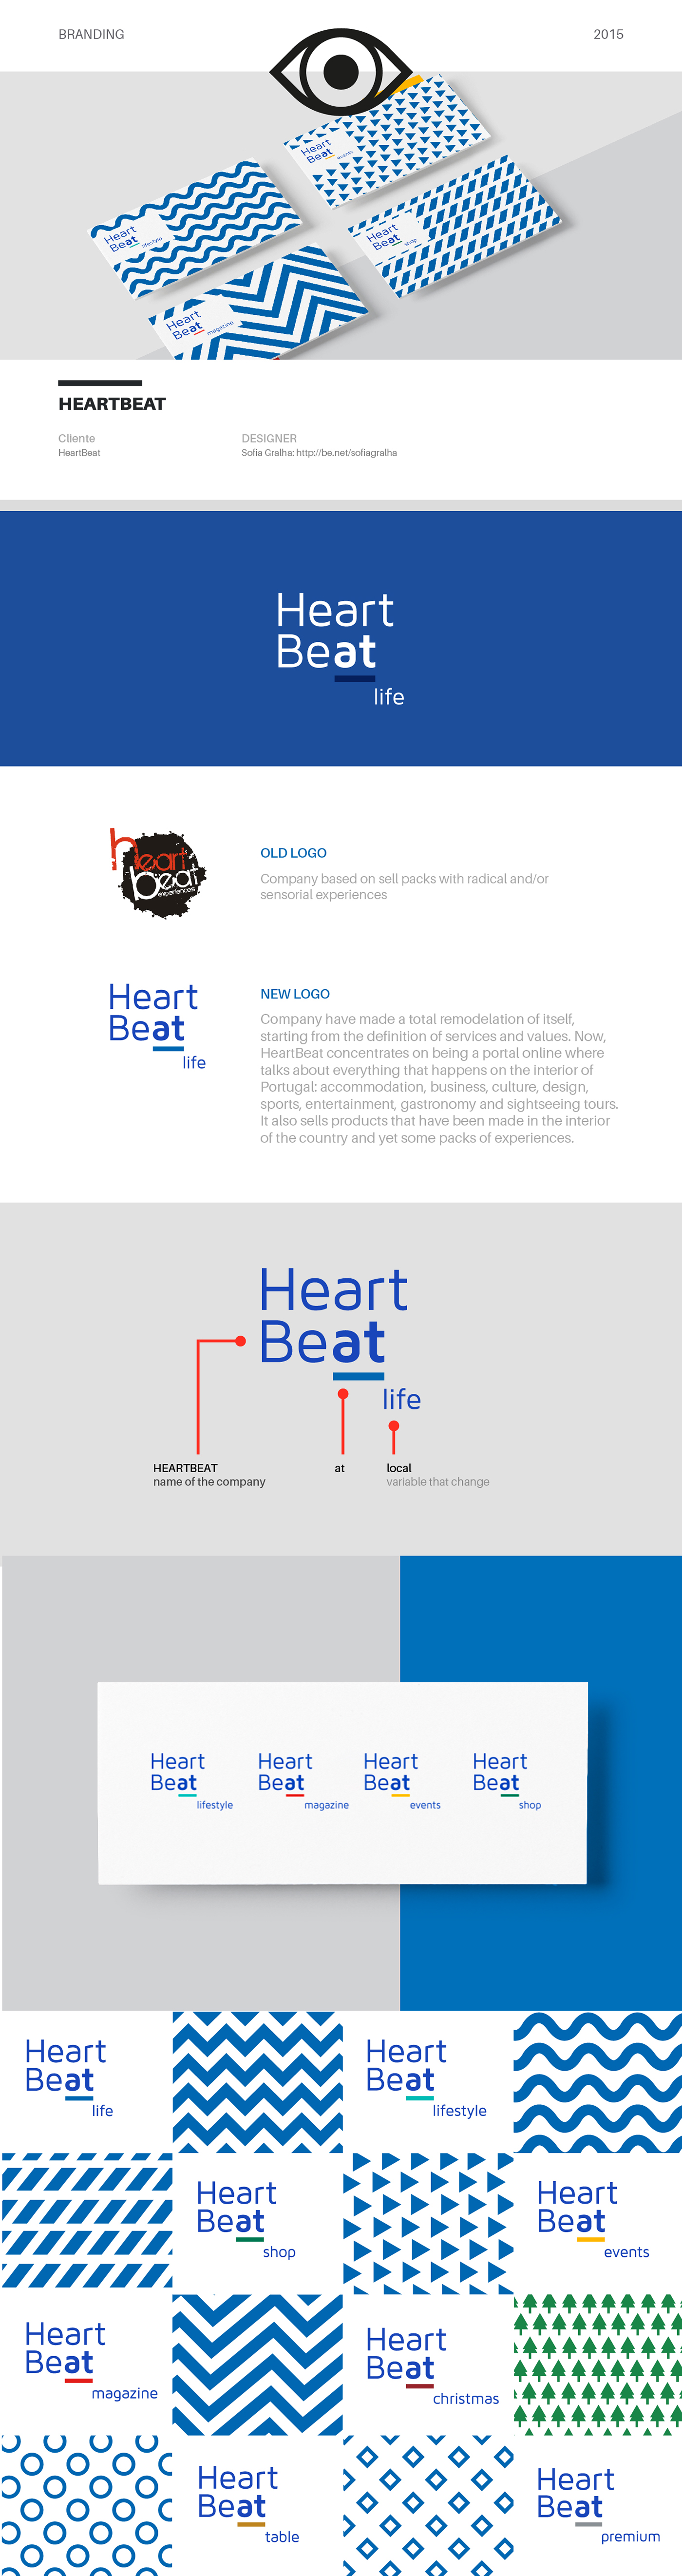 heart BEAT logo blue life Experience heartbeat motion Patterns Rebrand